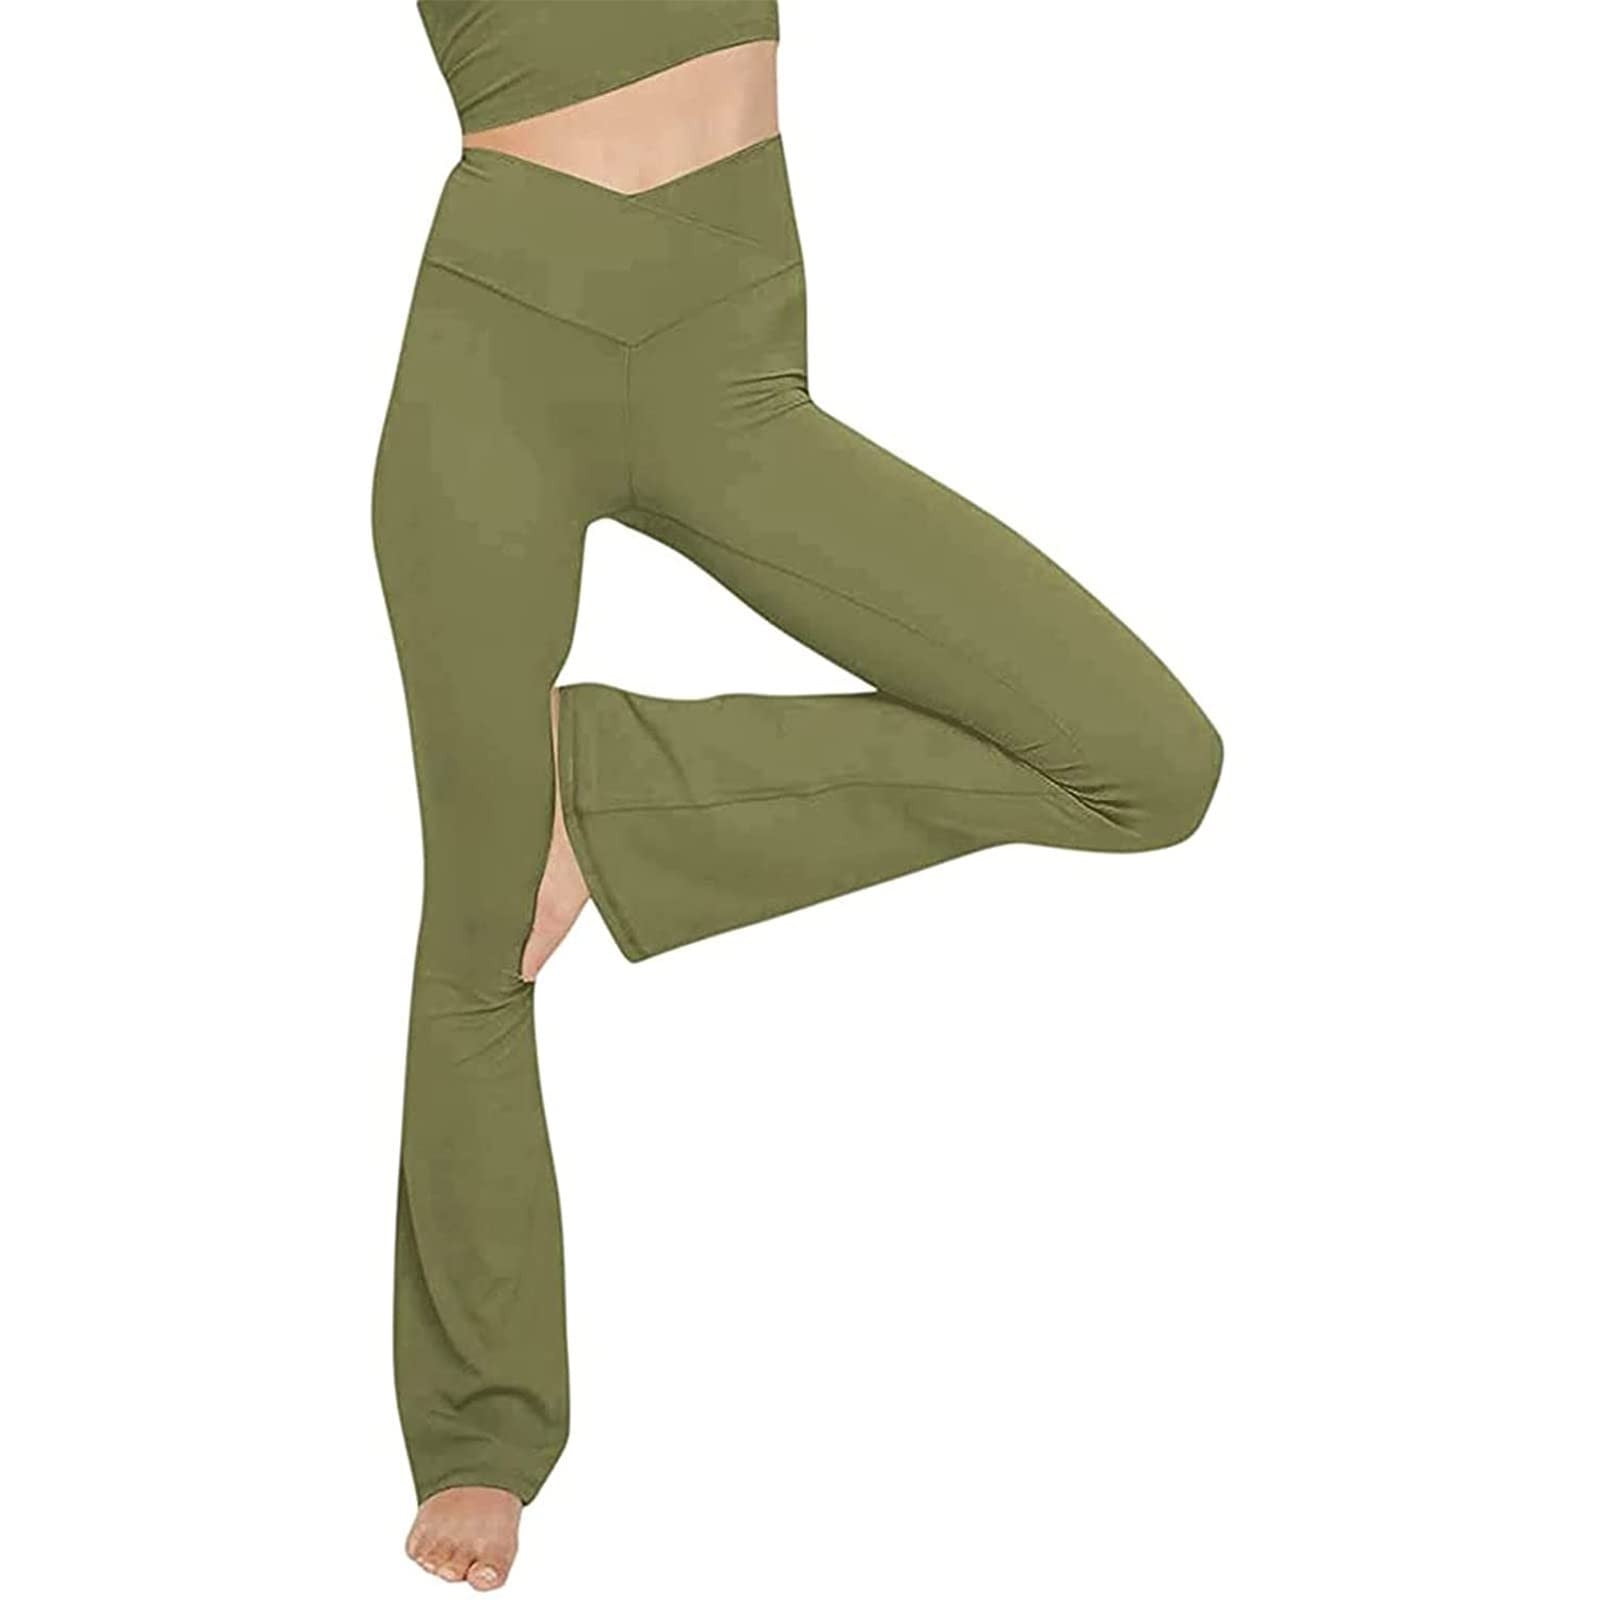 Yoga Pants Panties